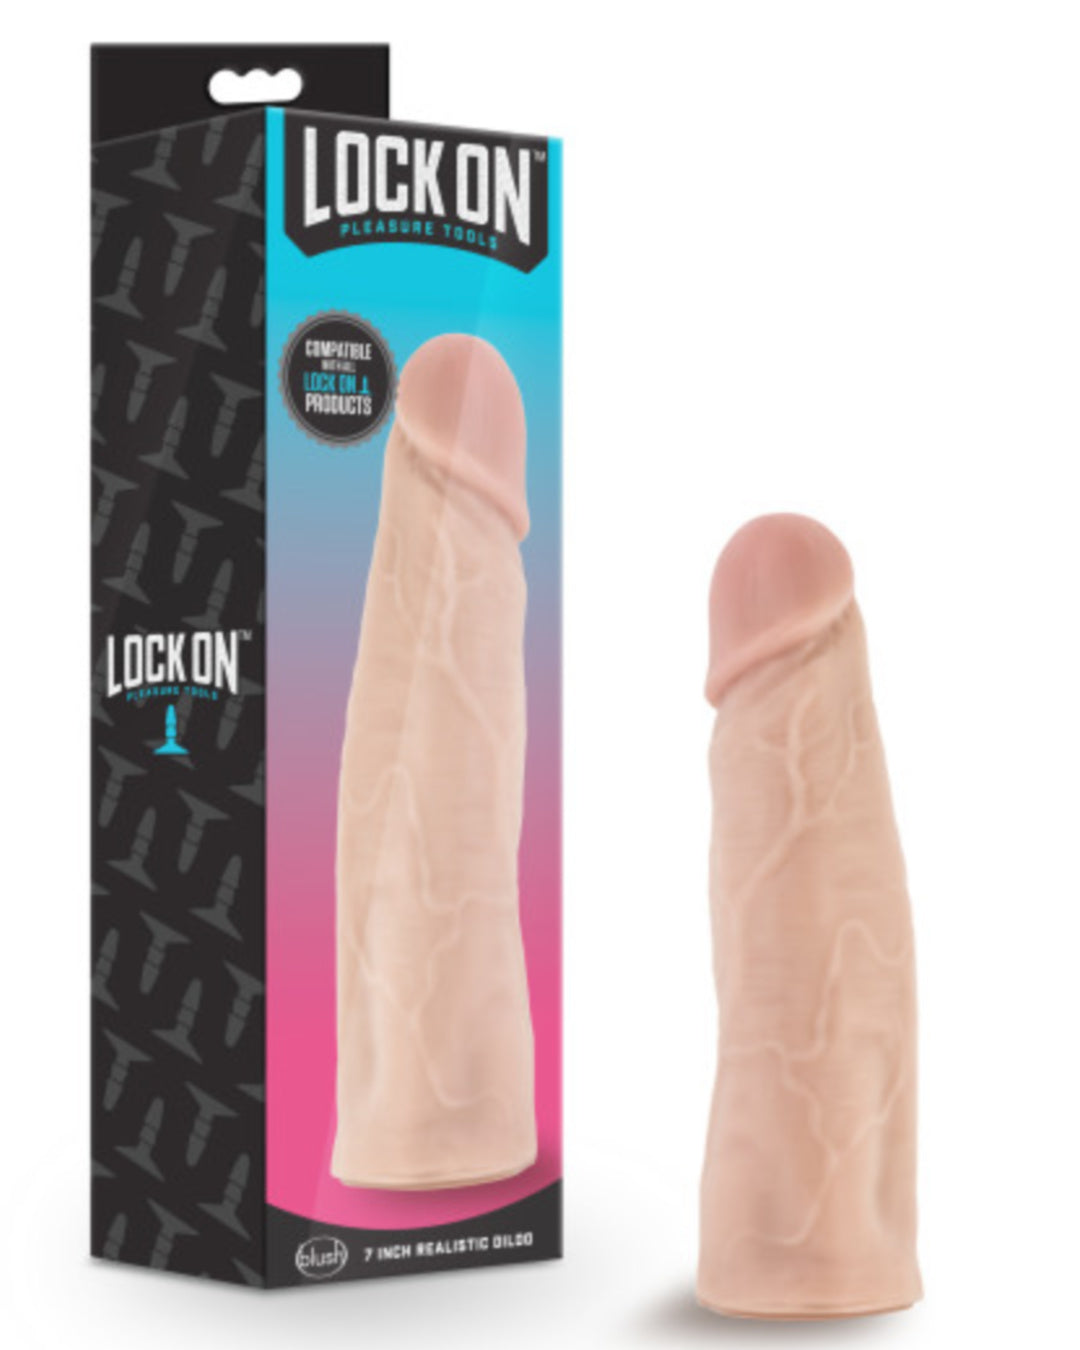 Lock On 7 Inch Realistic Lock On Dildo by Blush Novelties - Vanilla with box